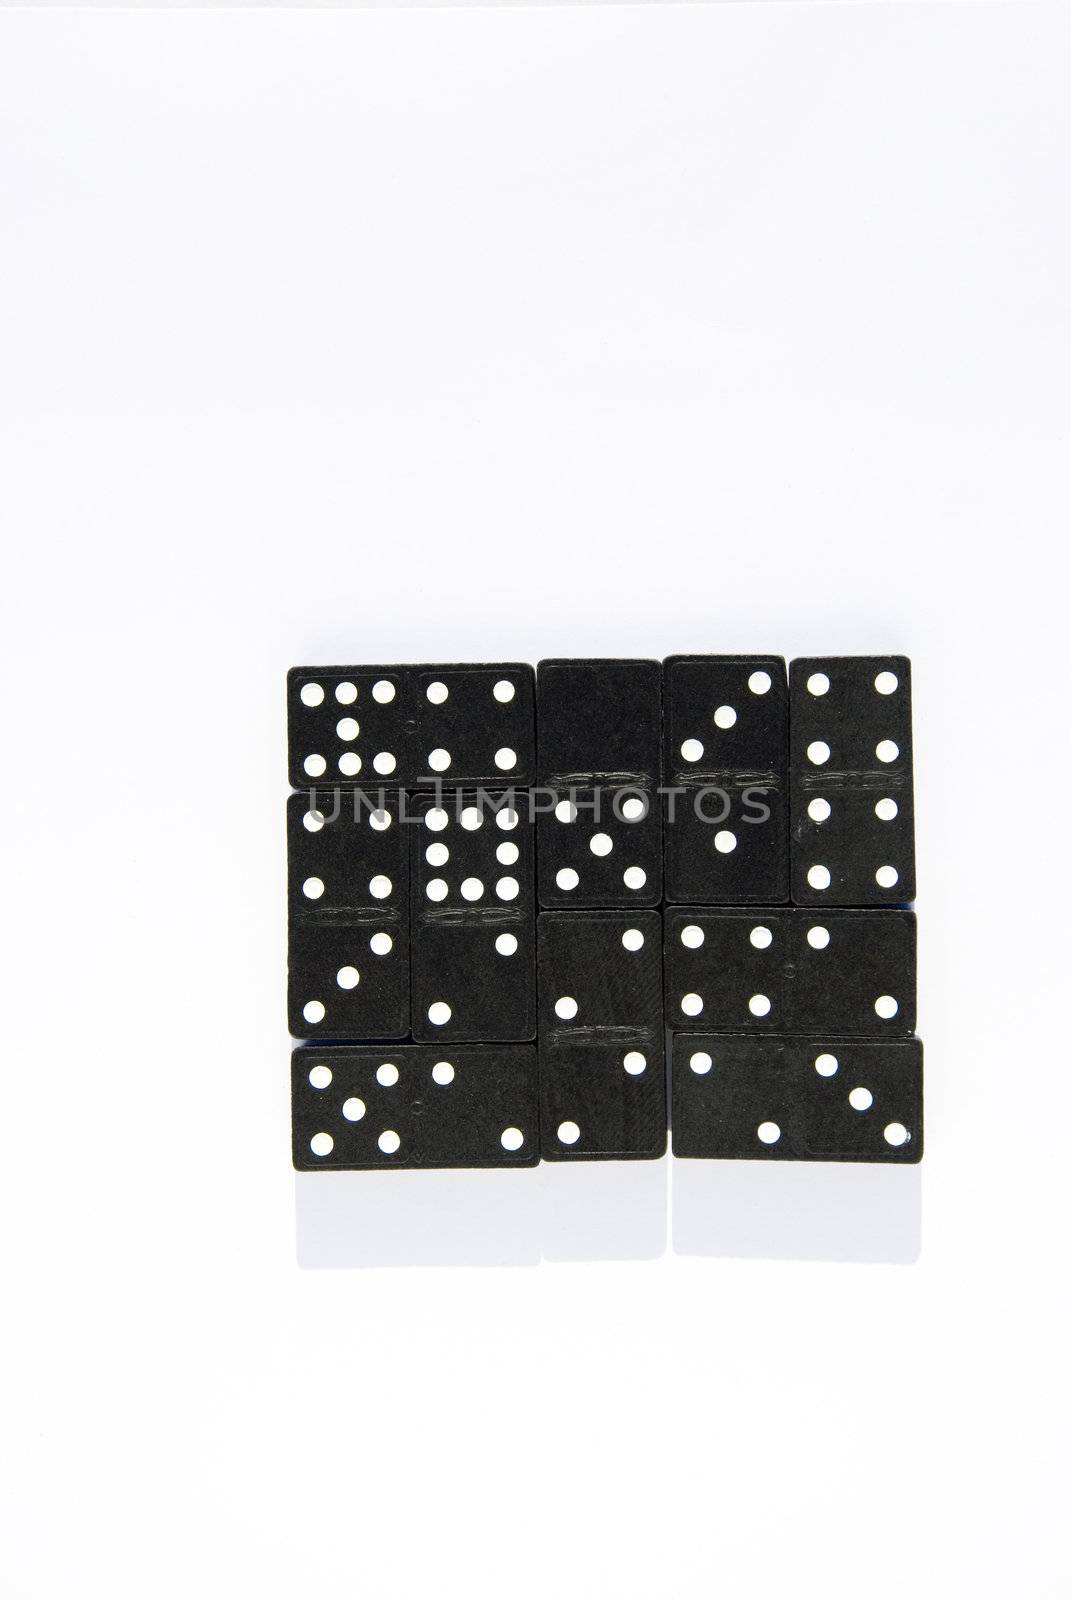 Black domino square blocks by sauletas